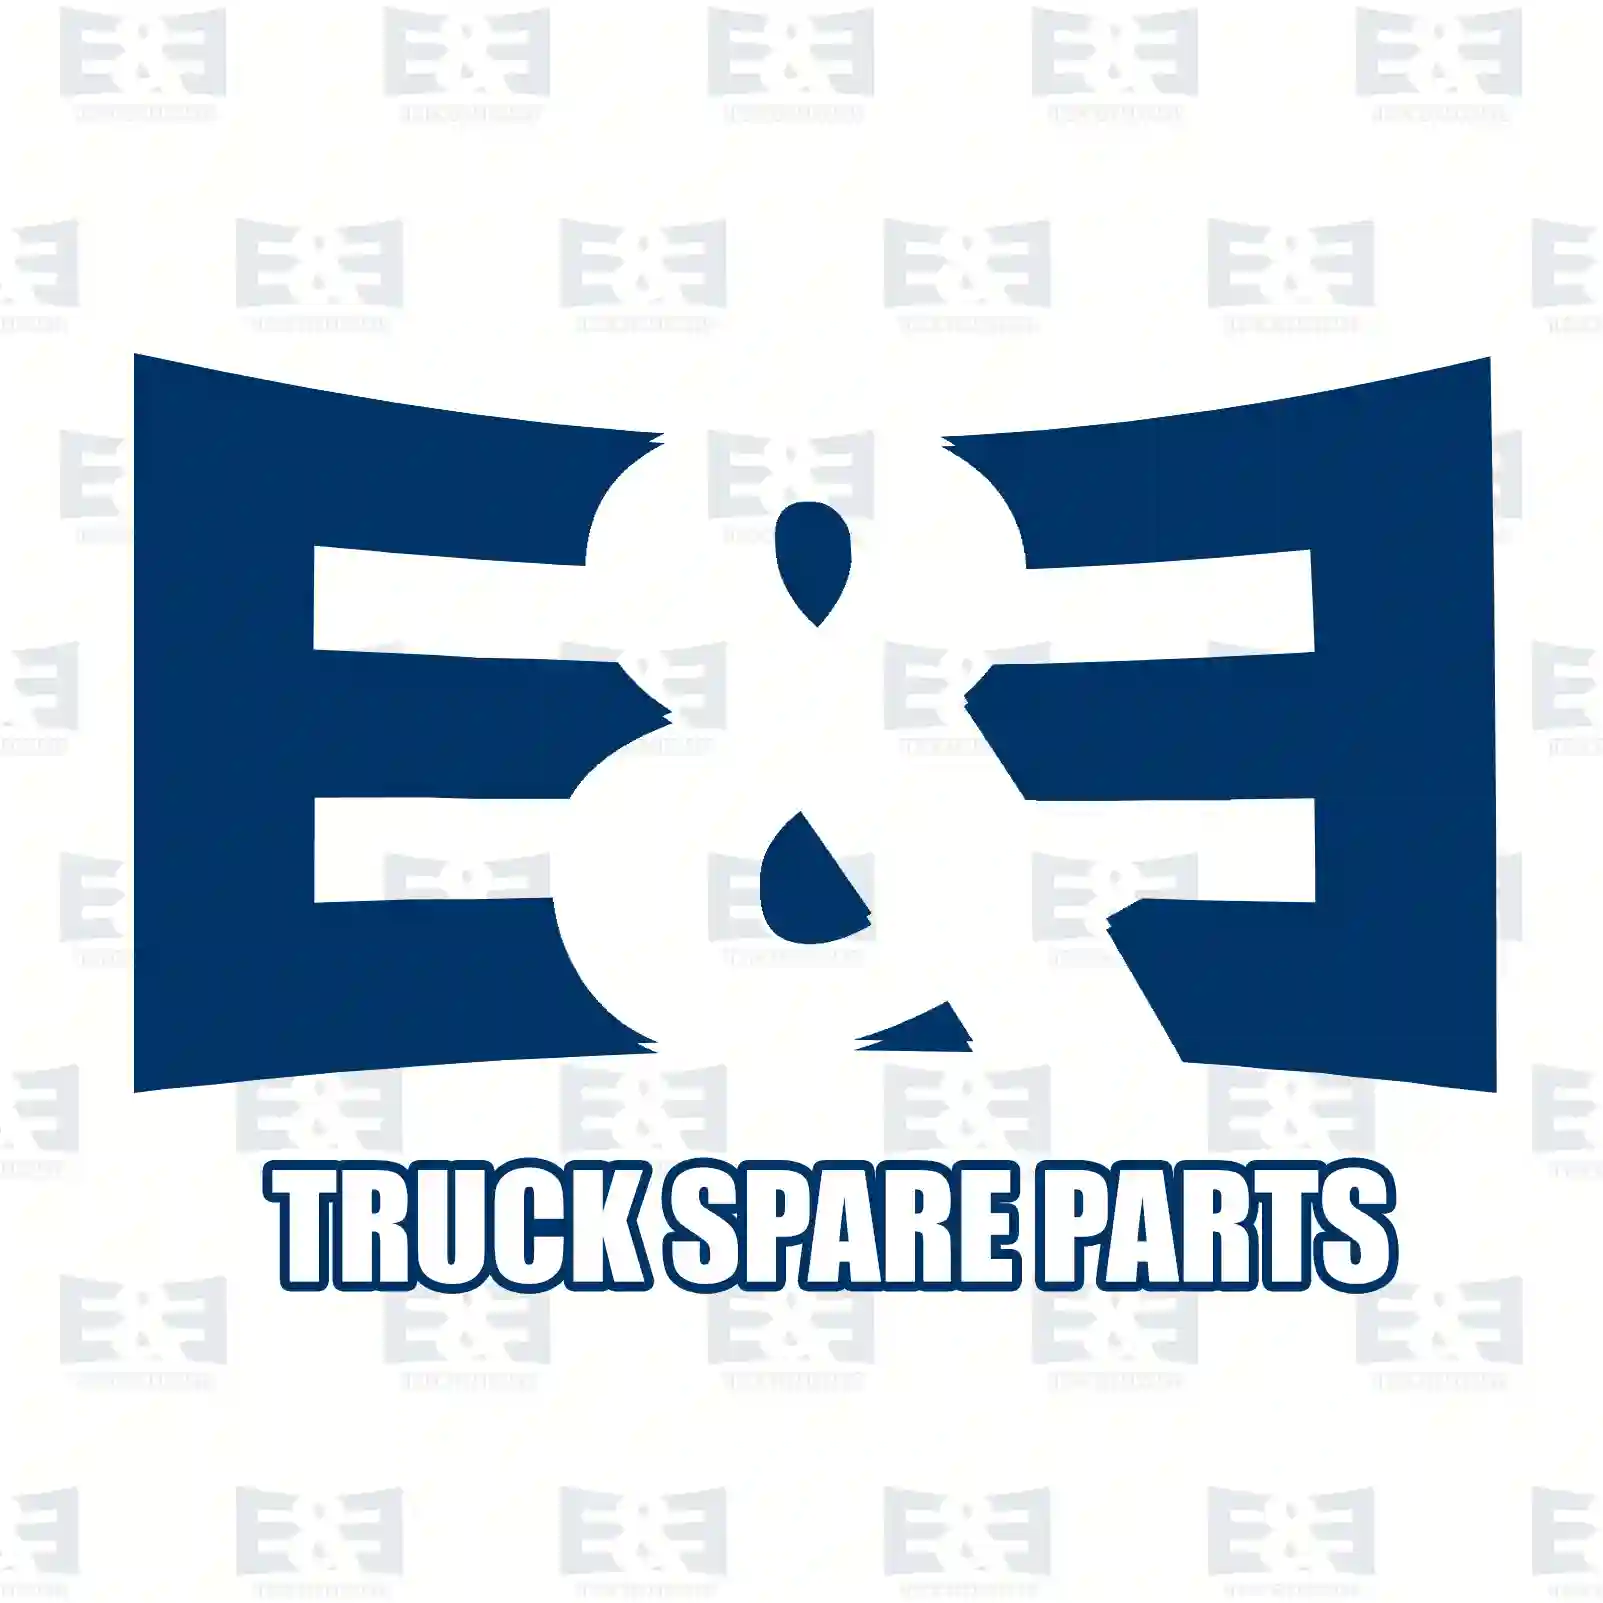  Bearing kit || E&E Truck Spare Parts | Truck Spare Parts, Auotomotive Spare Parts